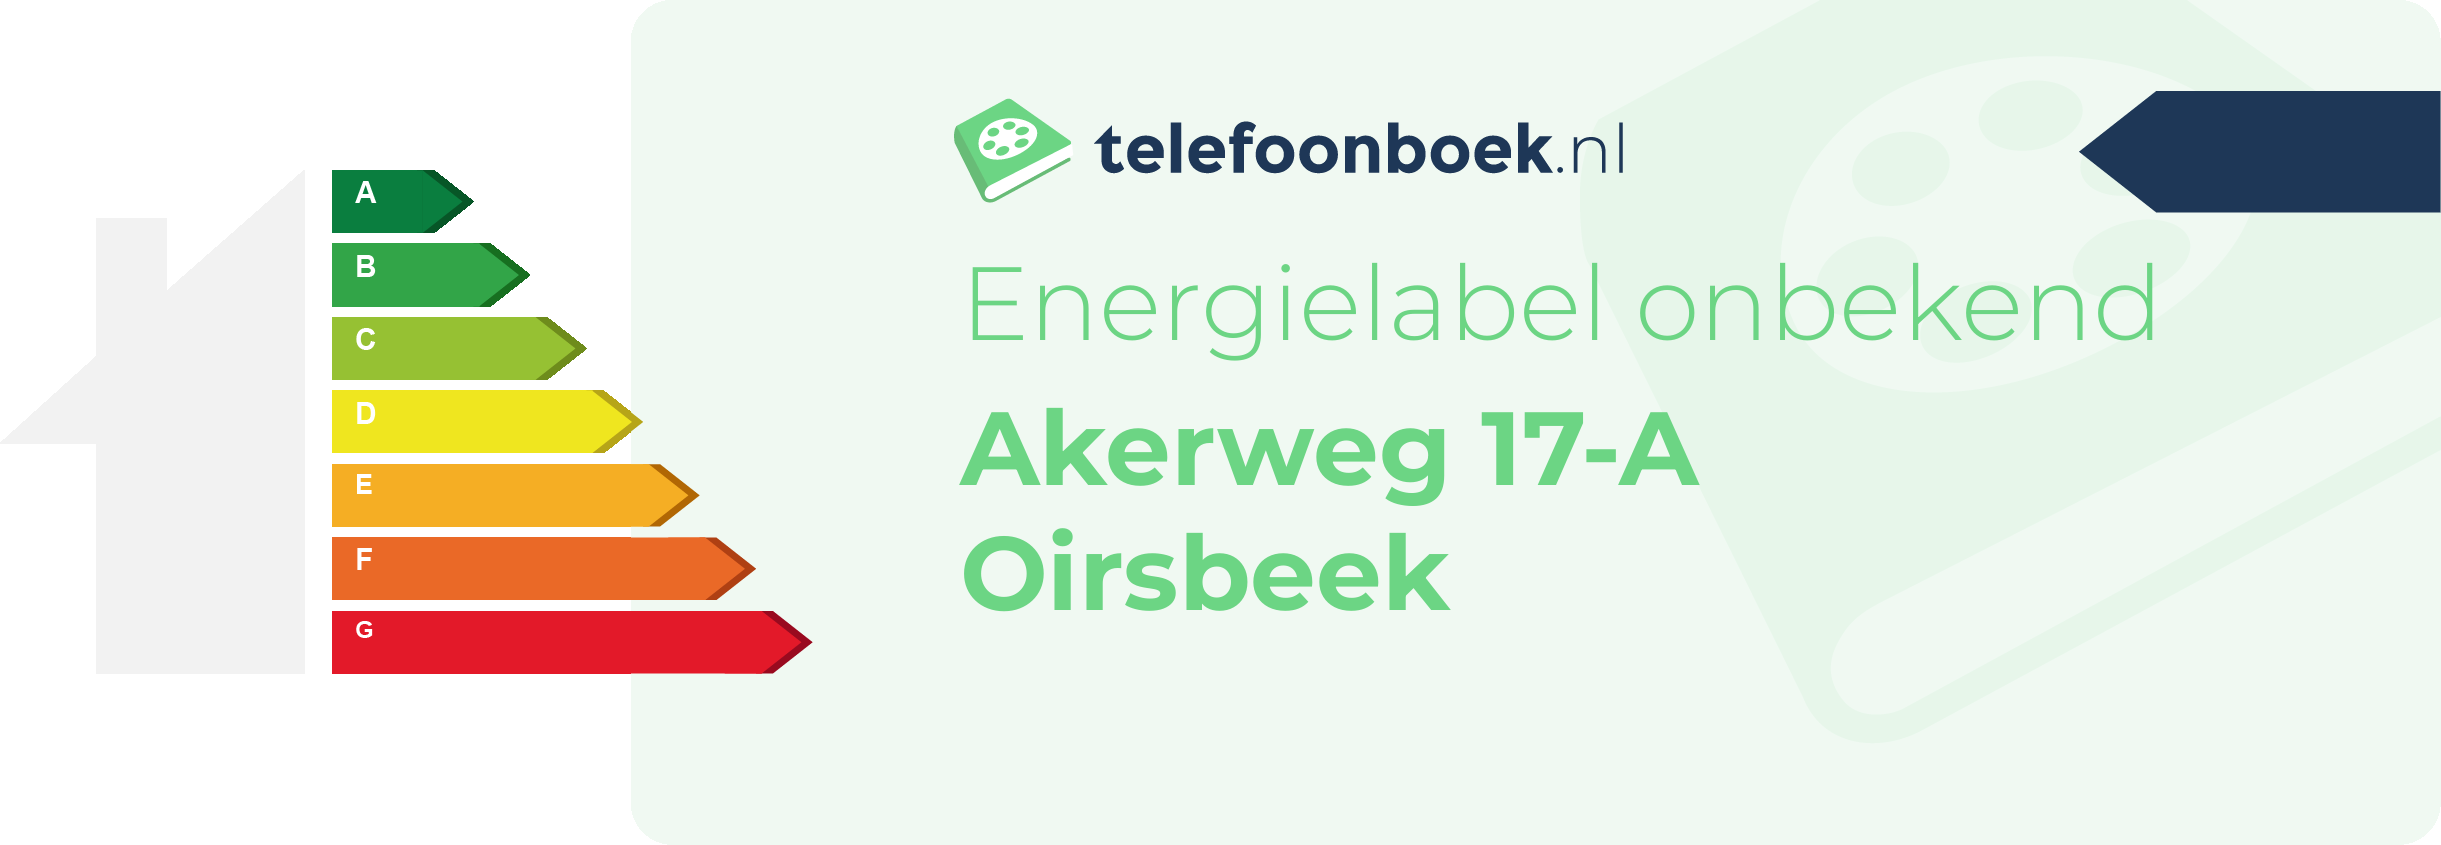 Energielabel Akerweg 17-A Oirsbeek